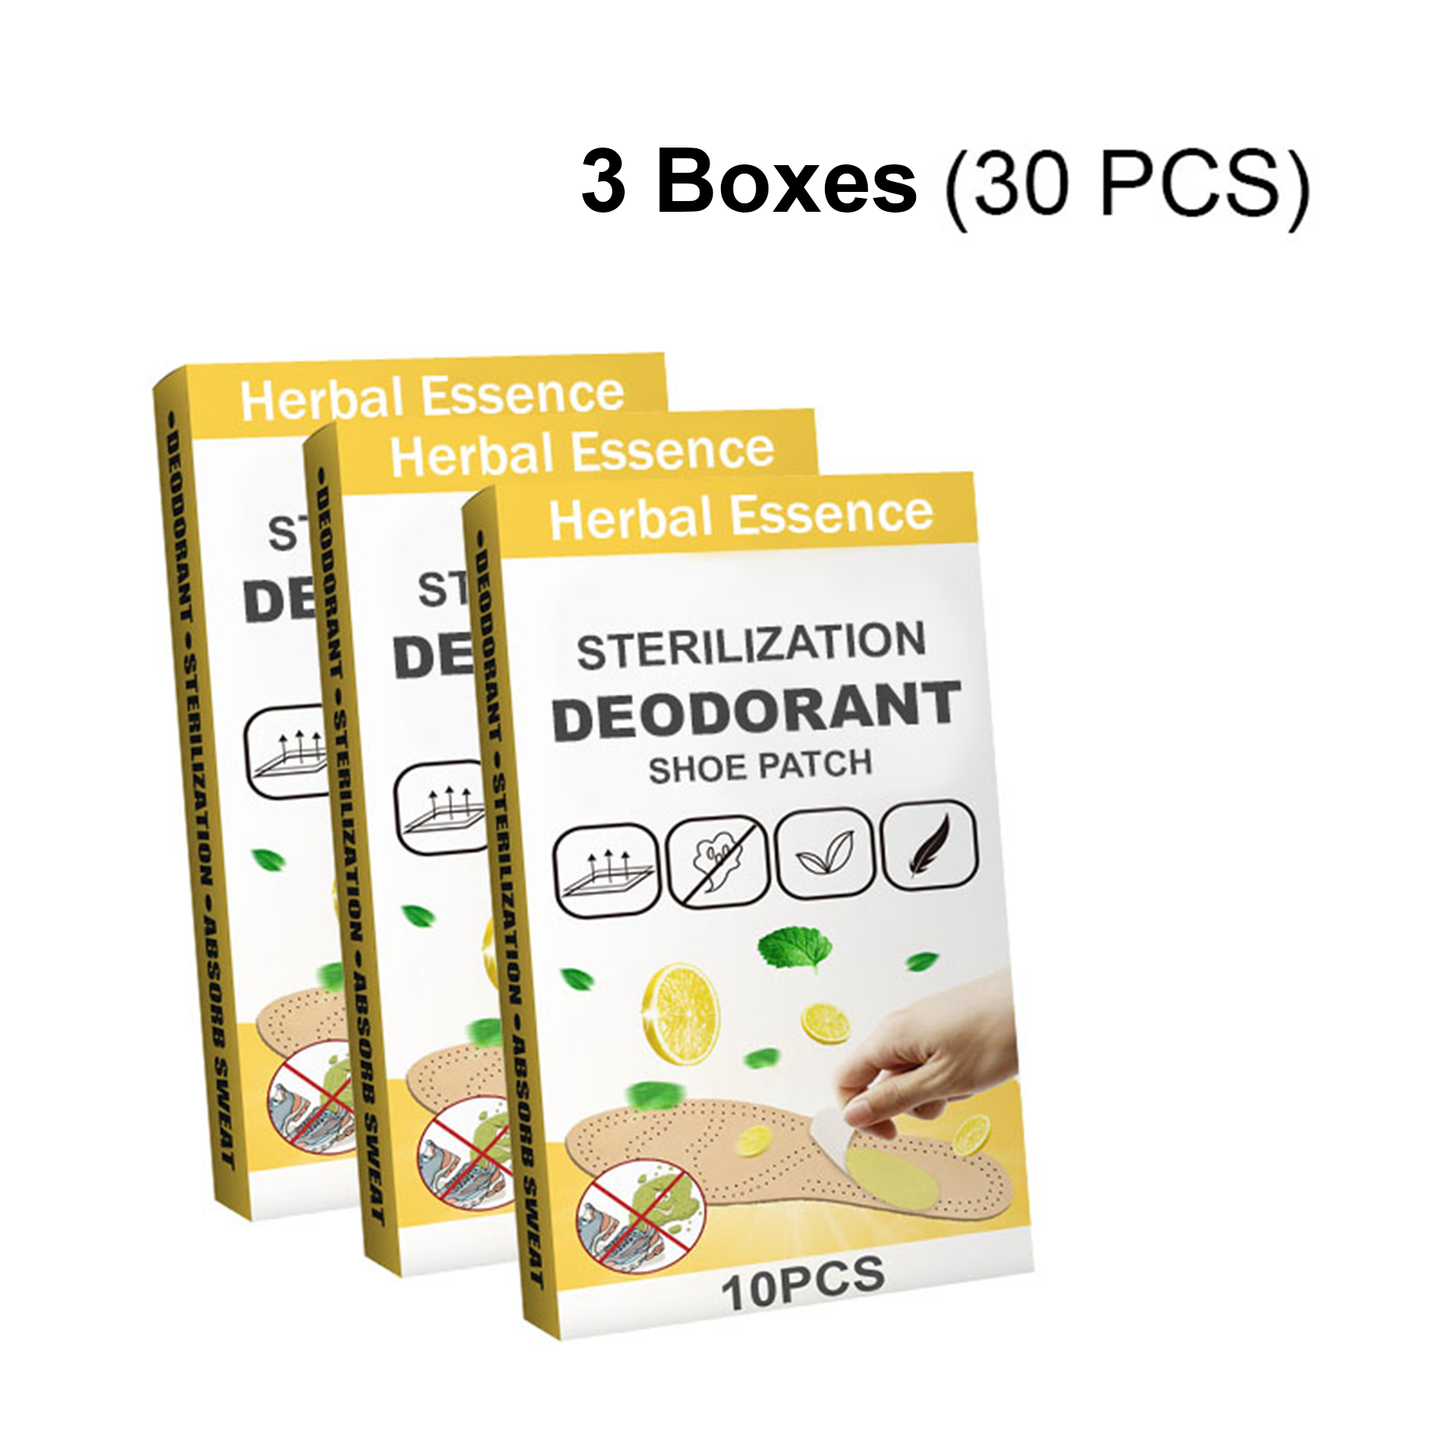 Herbal Essence Sterilization Deodorant Shoe Patch